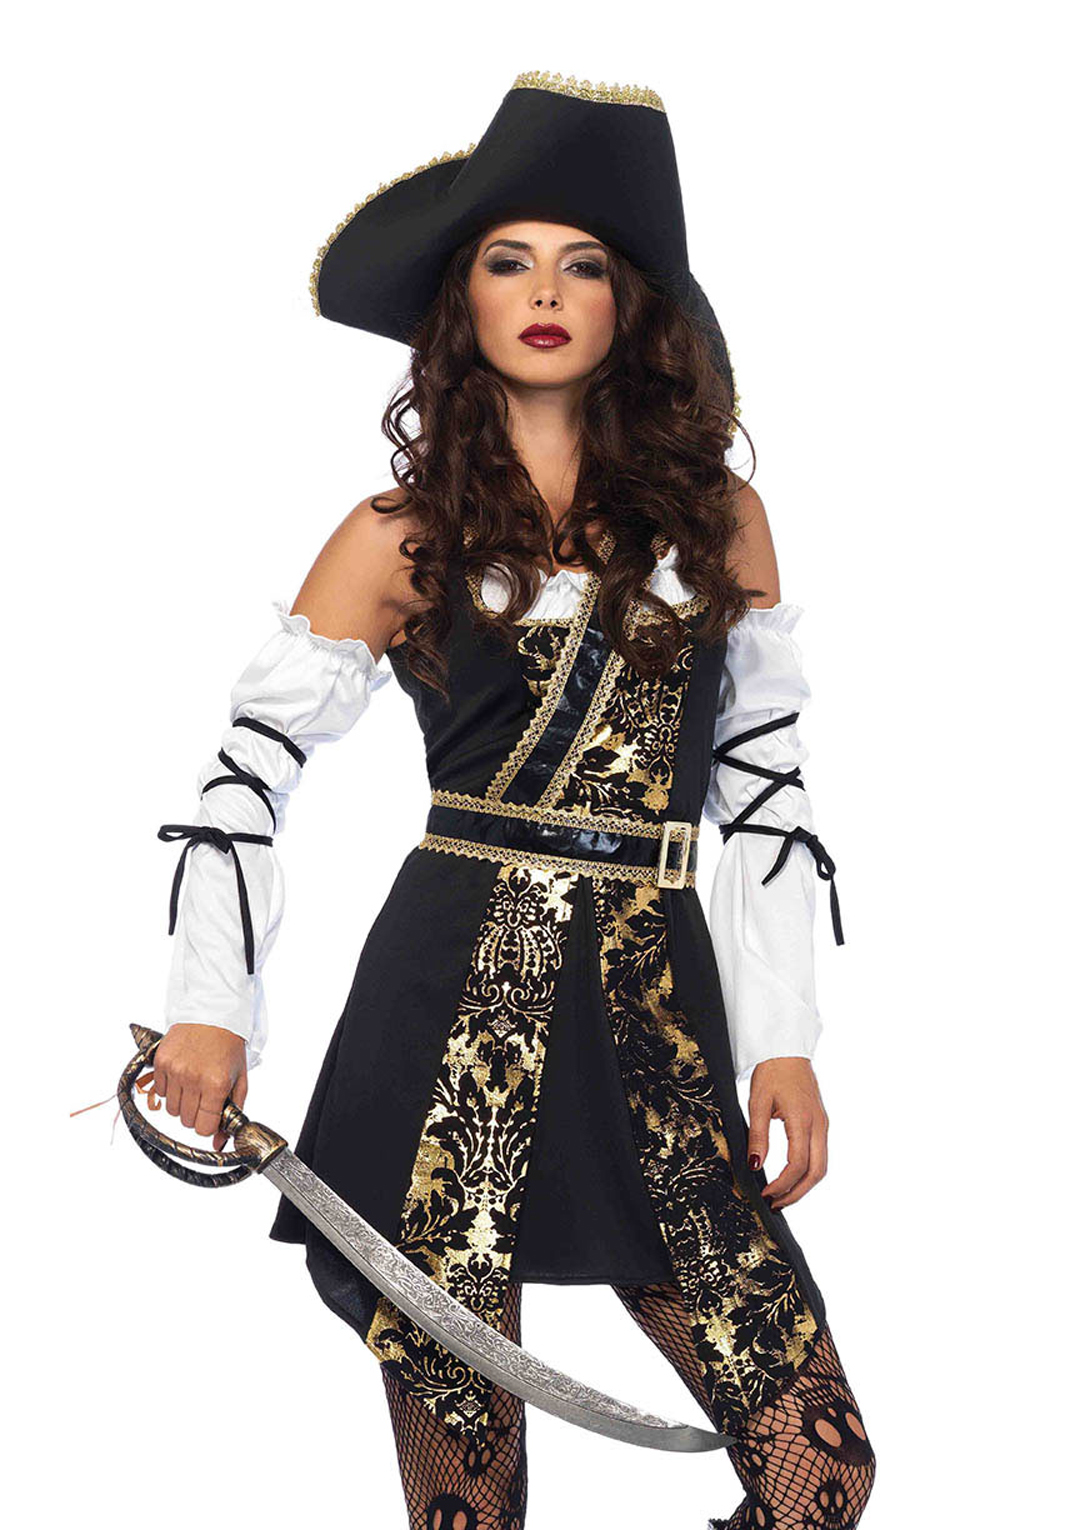 sexy pirate dress